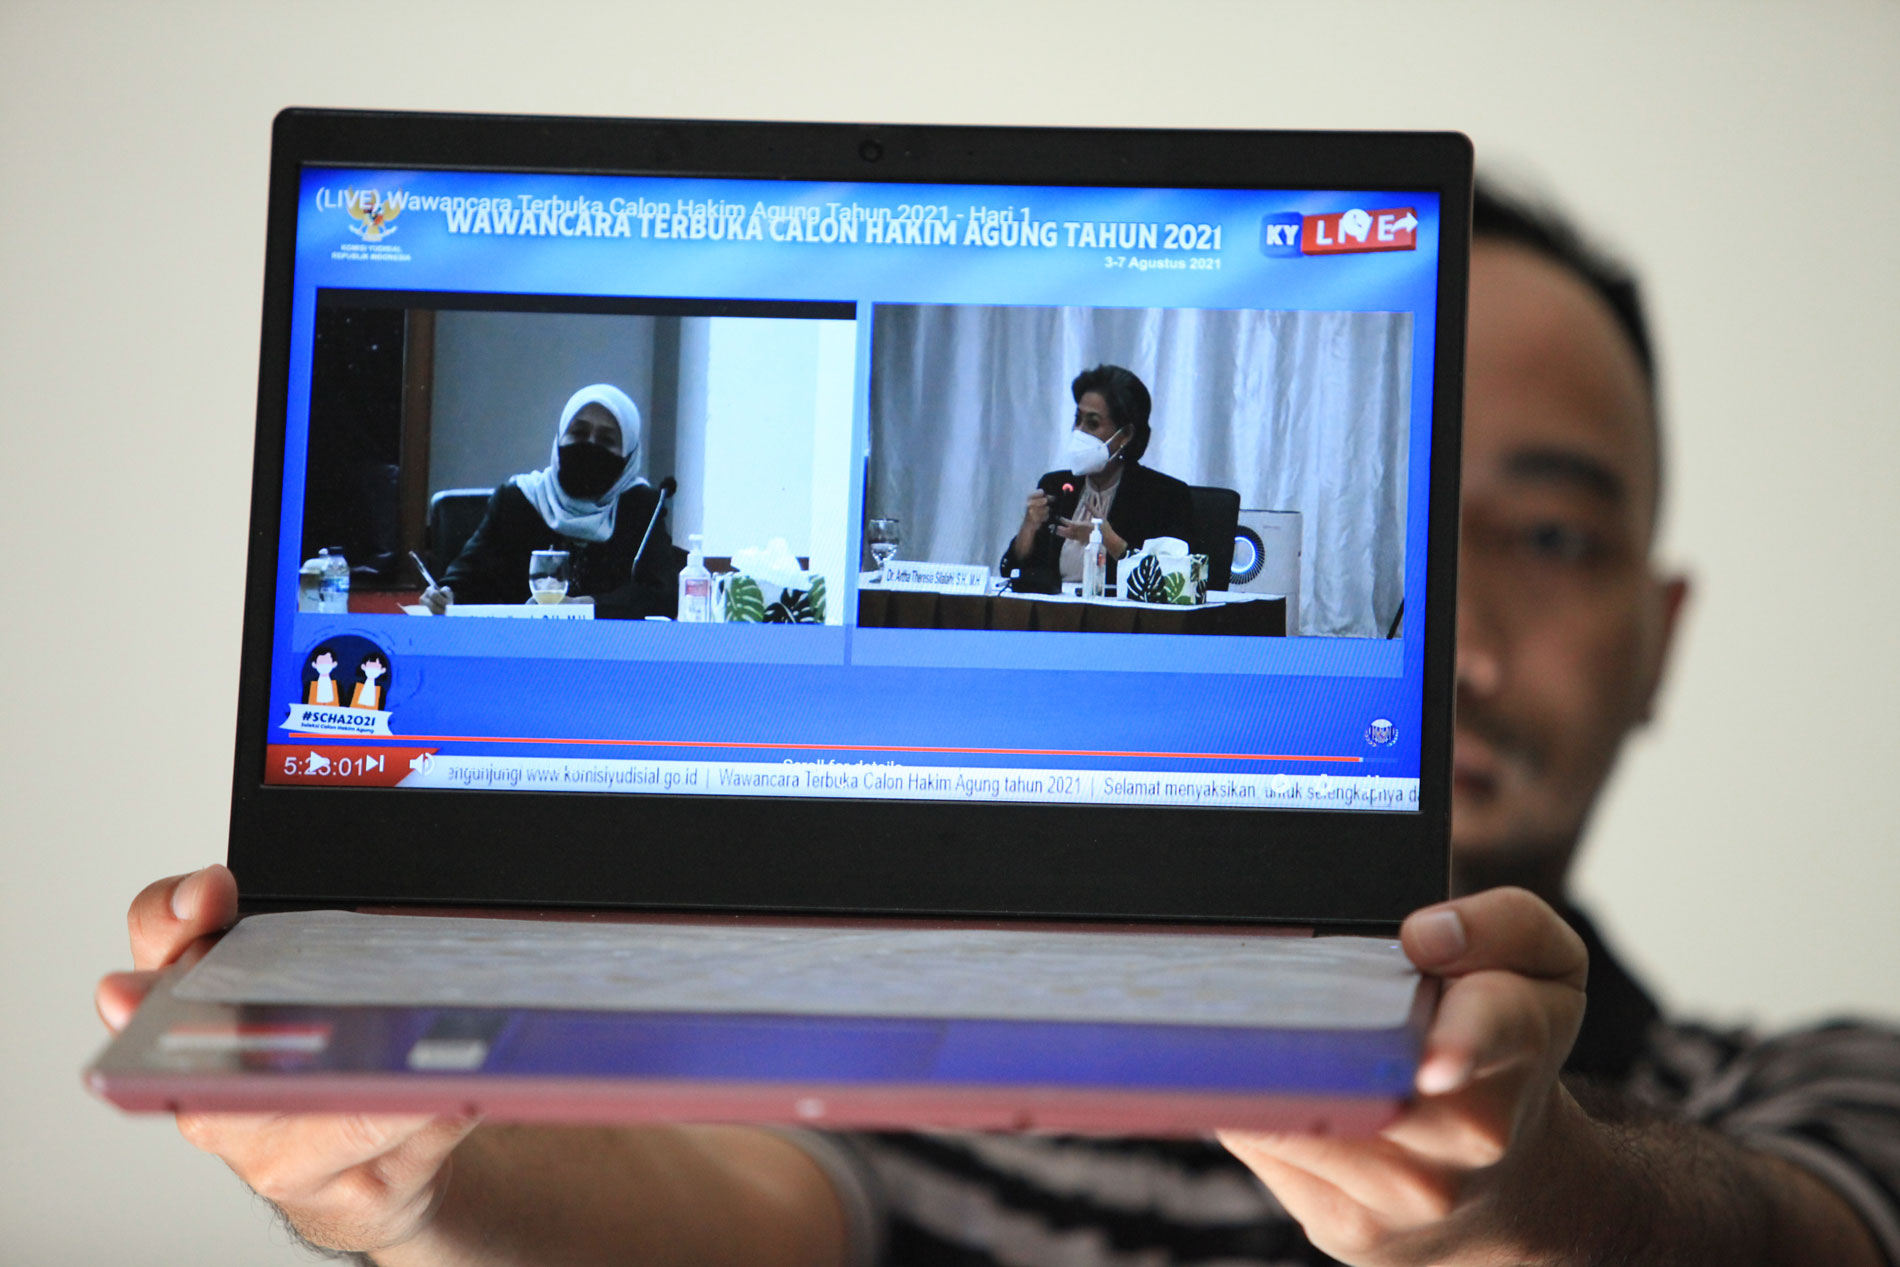 Wawancara Terbuka Calon Hakim Agung Tahun 2021 yang ditayangkan di kanal Youtube.com Komisi Yudisial.
(foto: TEMPO/ Gunawan Wicaksono)